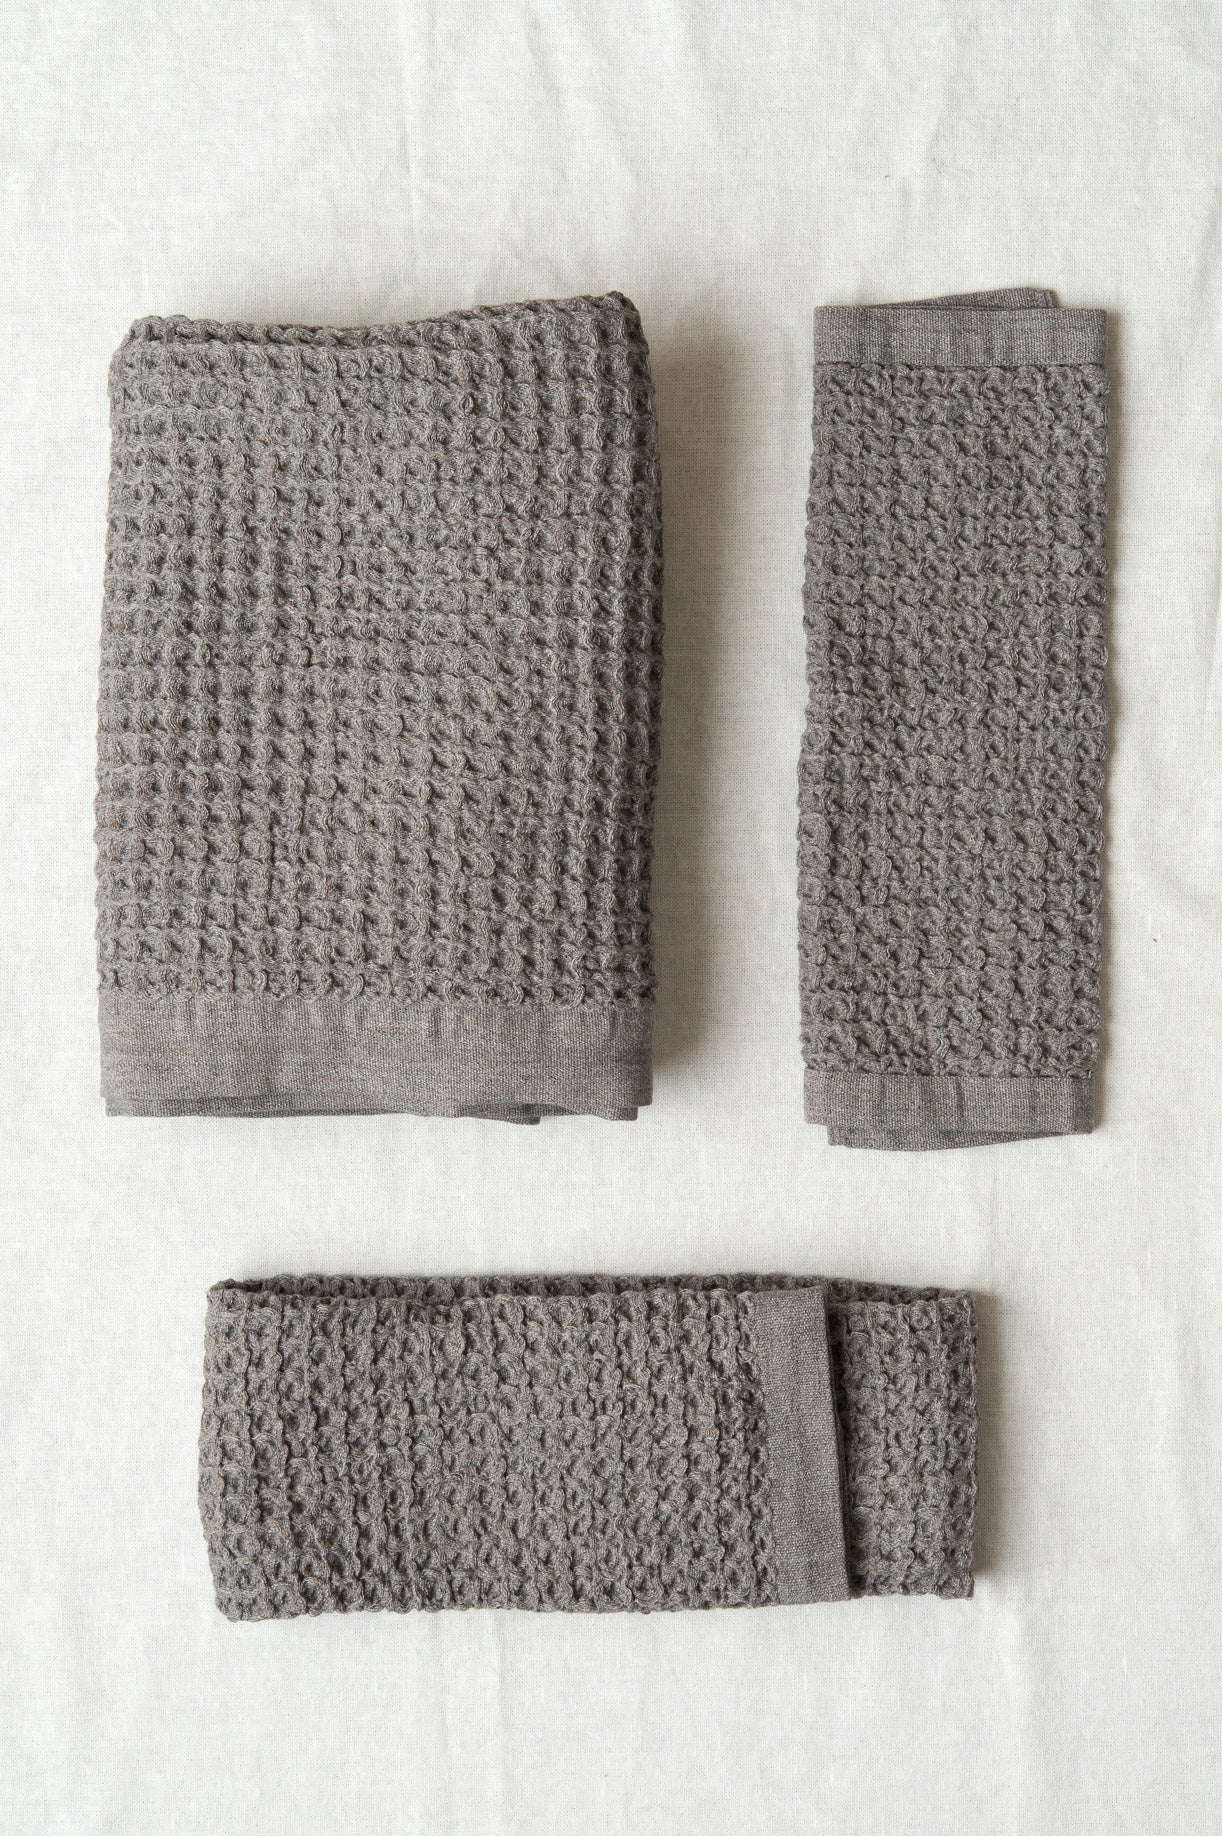 kontex waffle towels in charcoal